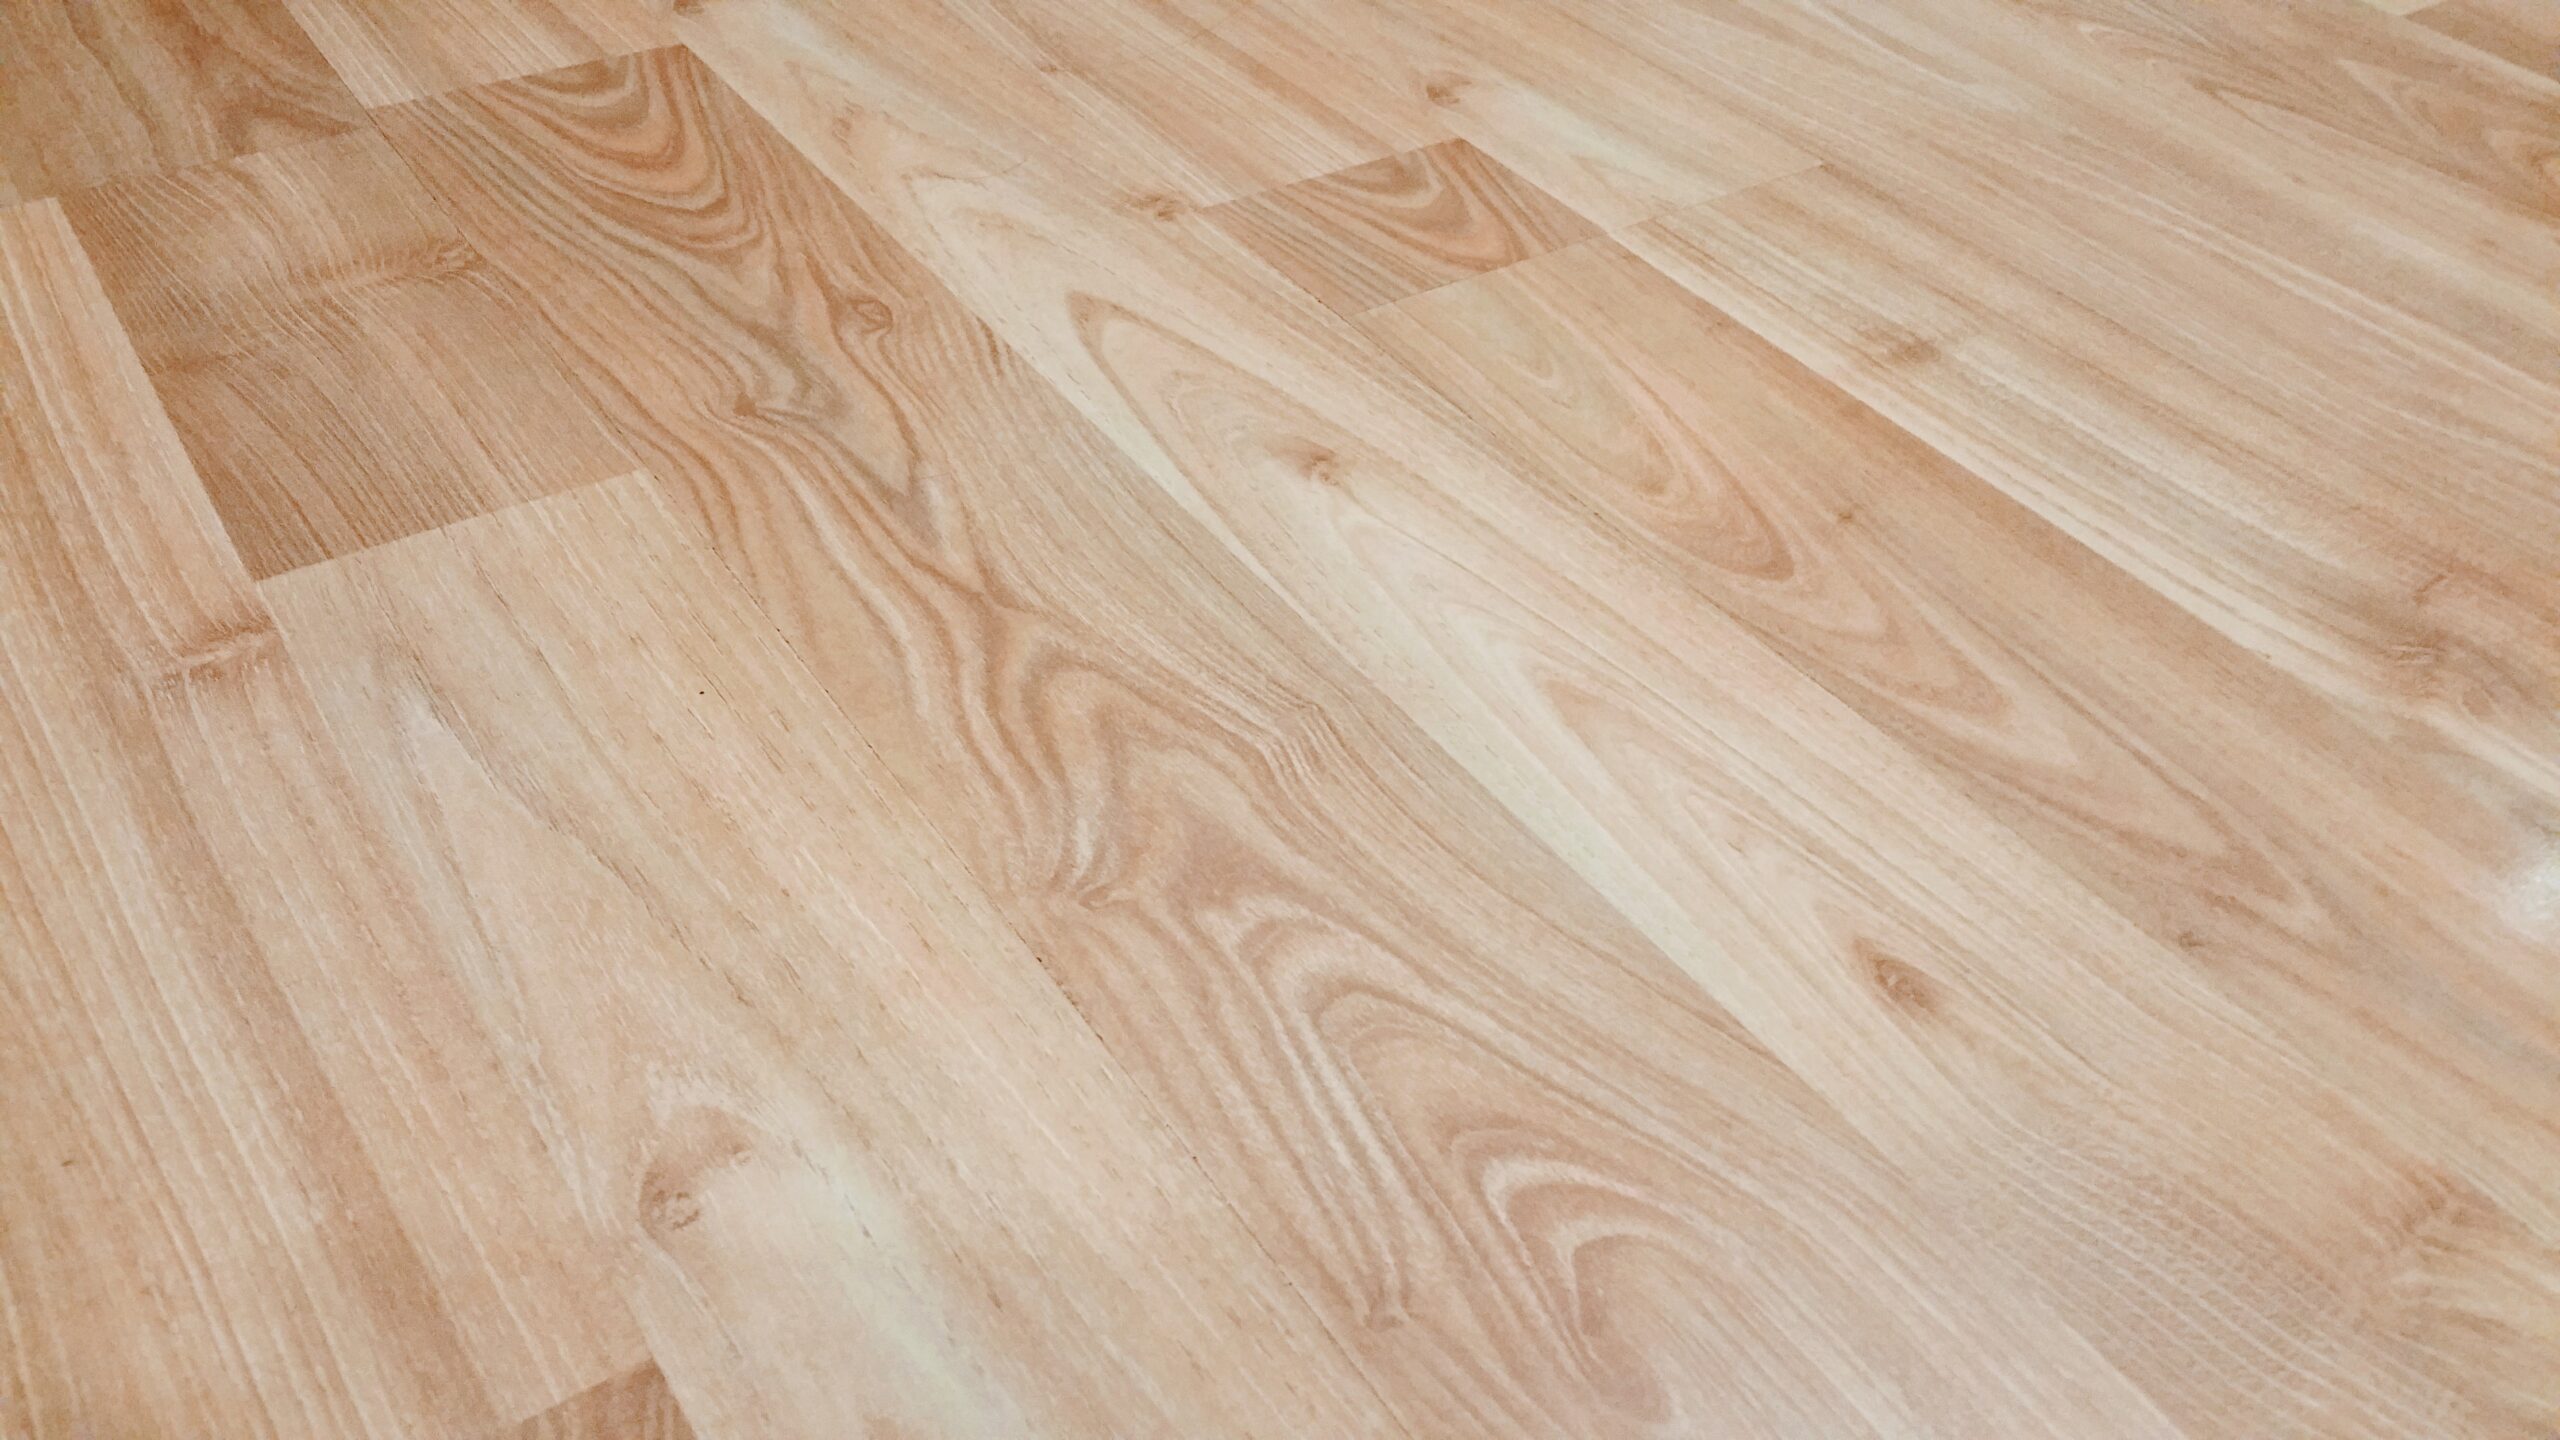 image of wooden flooring